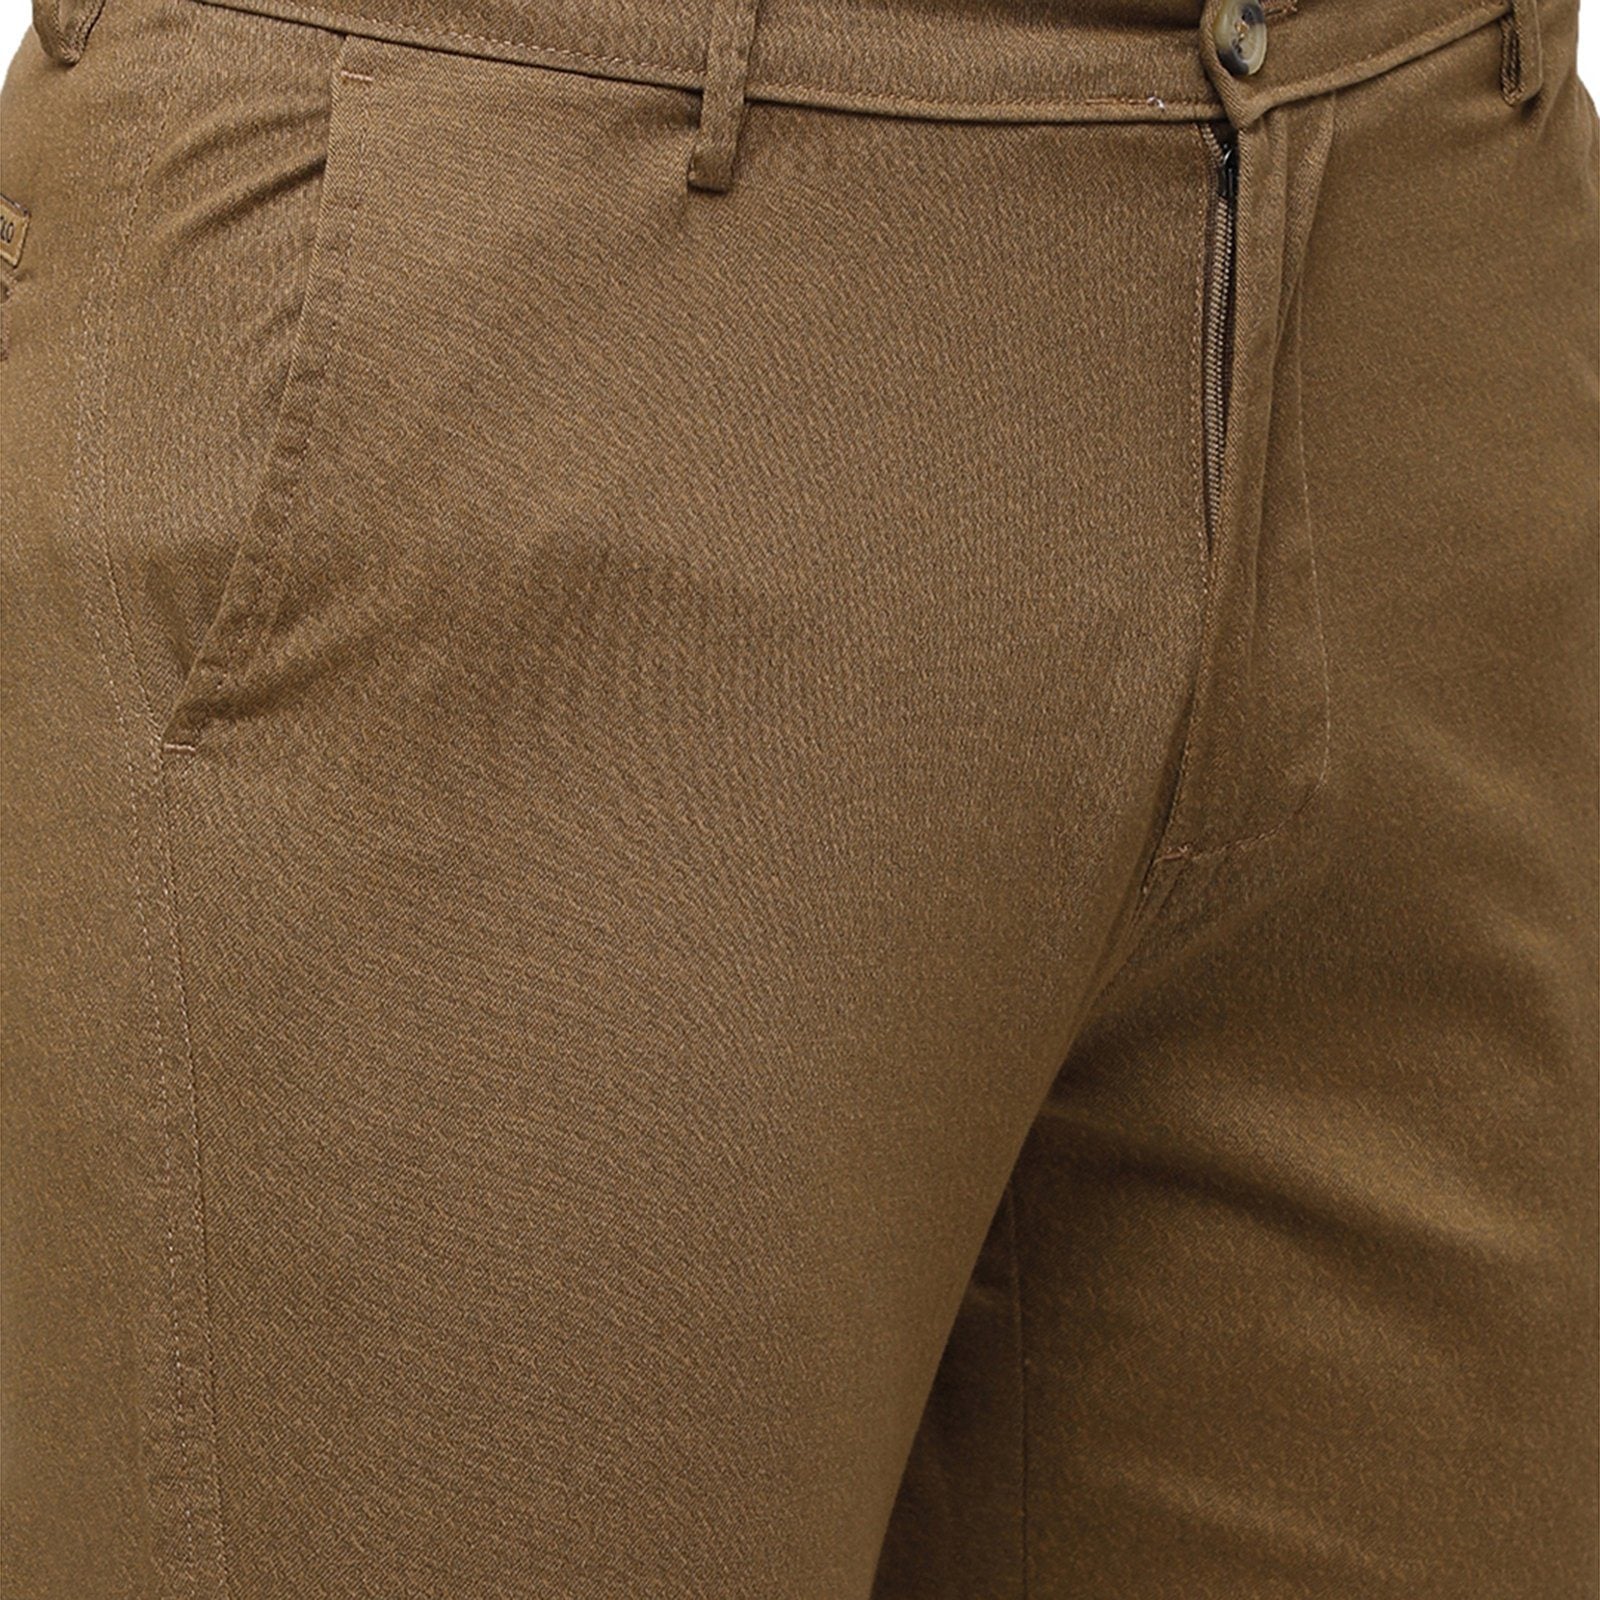 Classic Polo Men's Slim Fit Bottom Bottom Solid Cotton Blend Khaki Trousers TM1-32 B-KHA-SL-LY classic polo trousers Classic Polo 